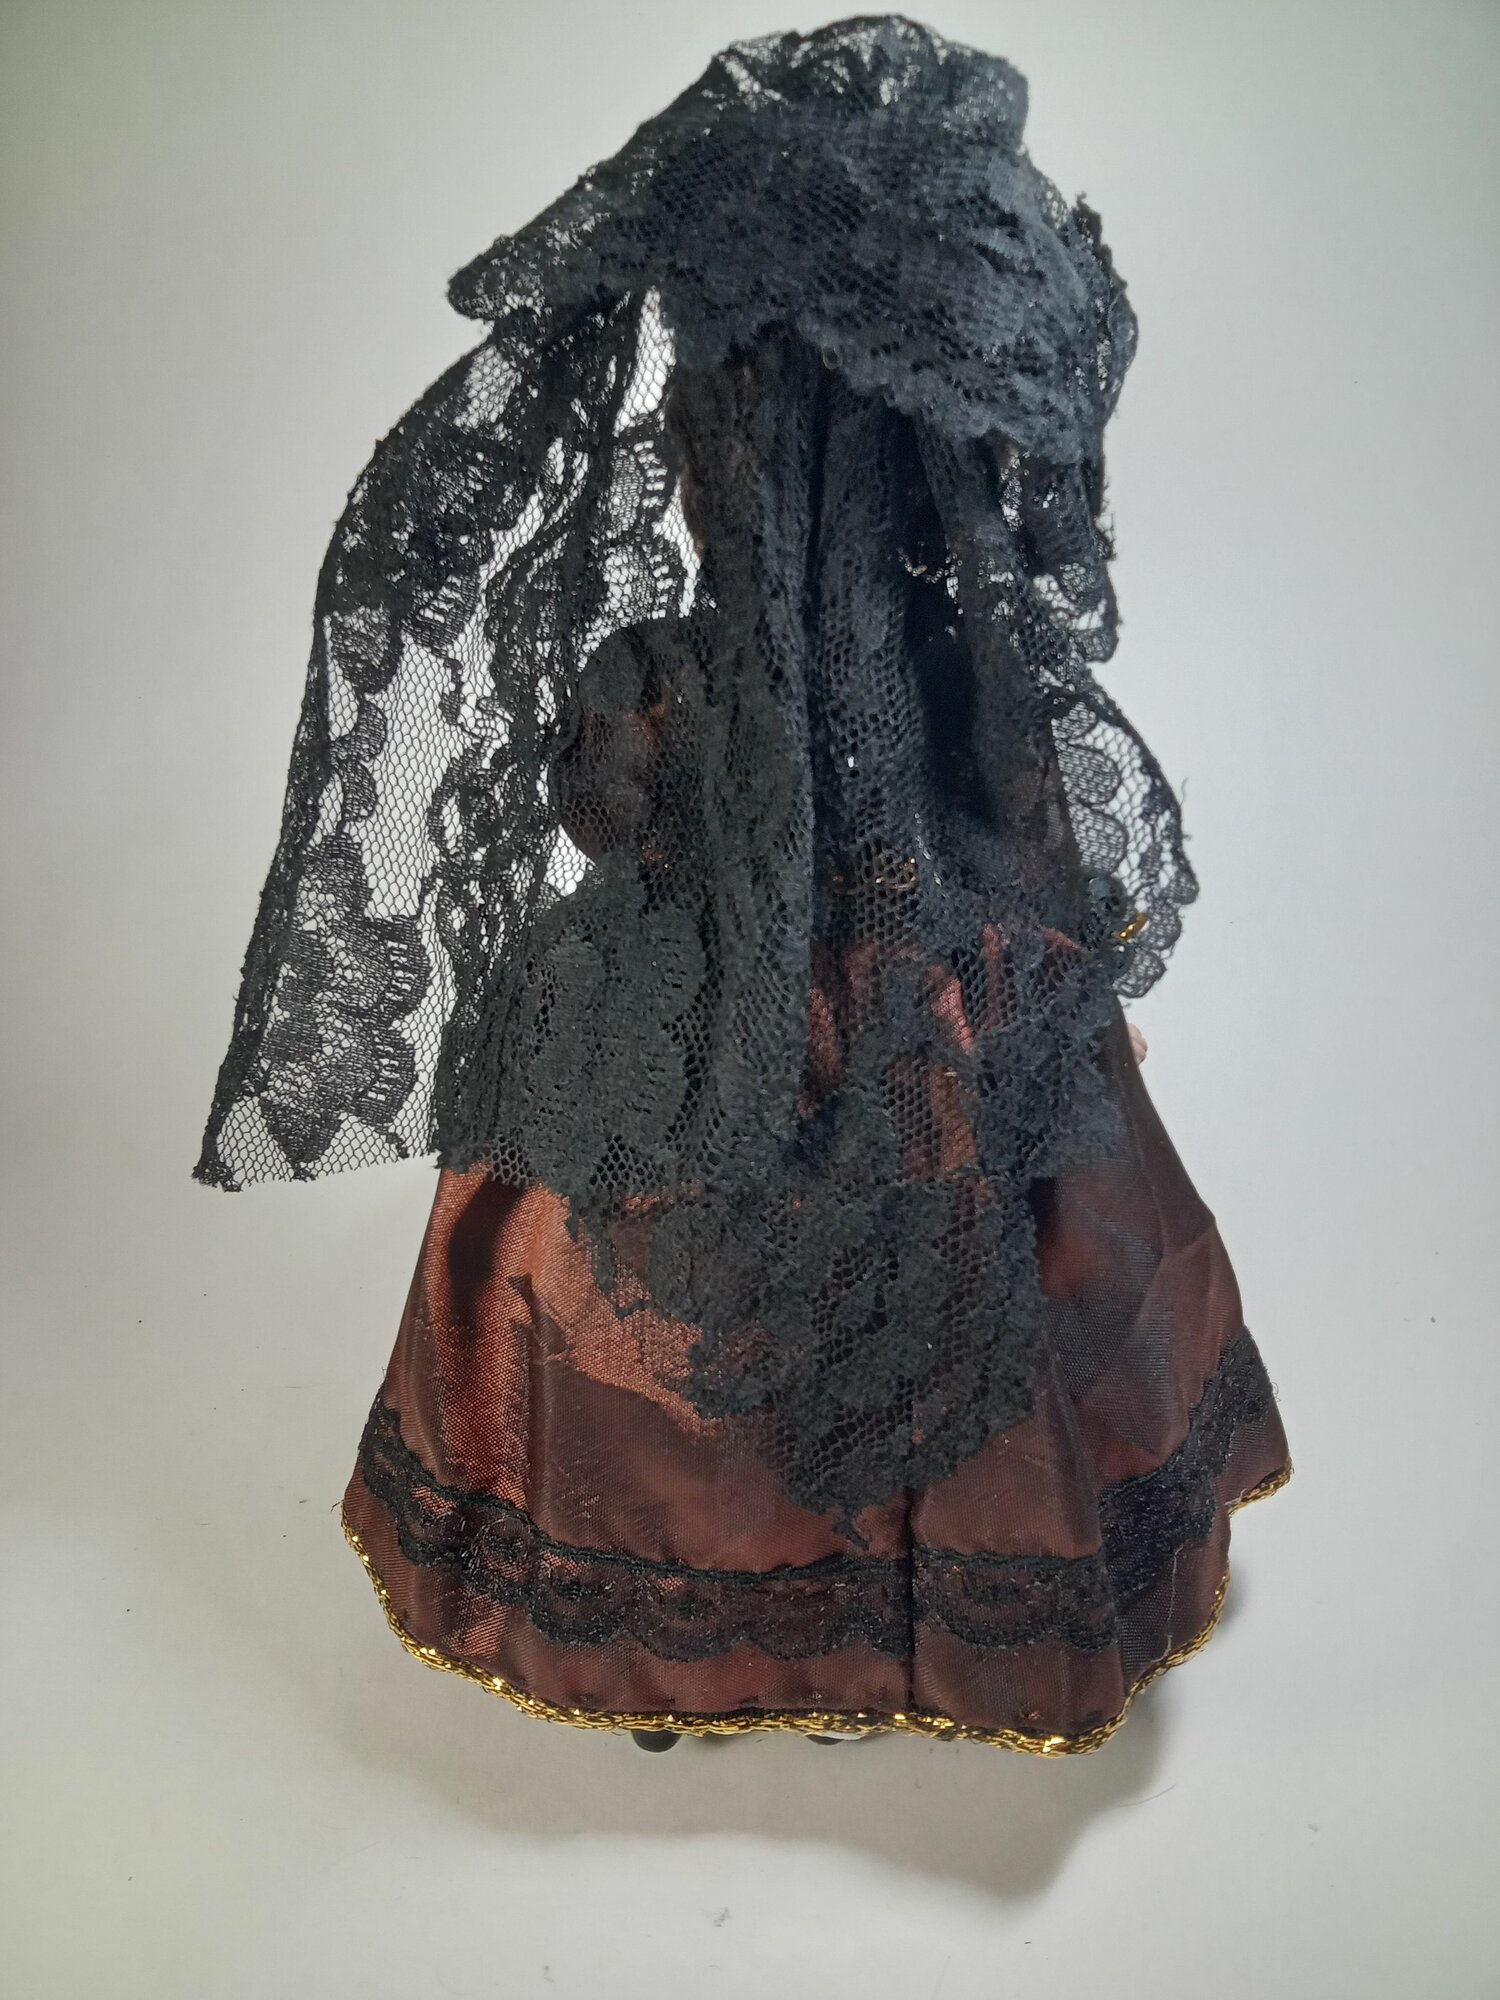 Кукла коллекционная пепита хименес (Хуан Валера "Пепита Хименес") доработанный костюм